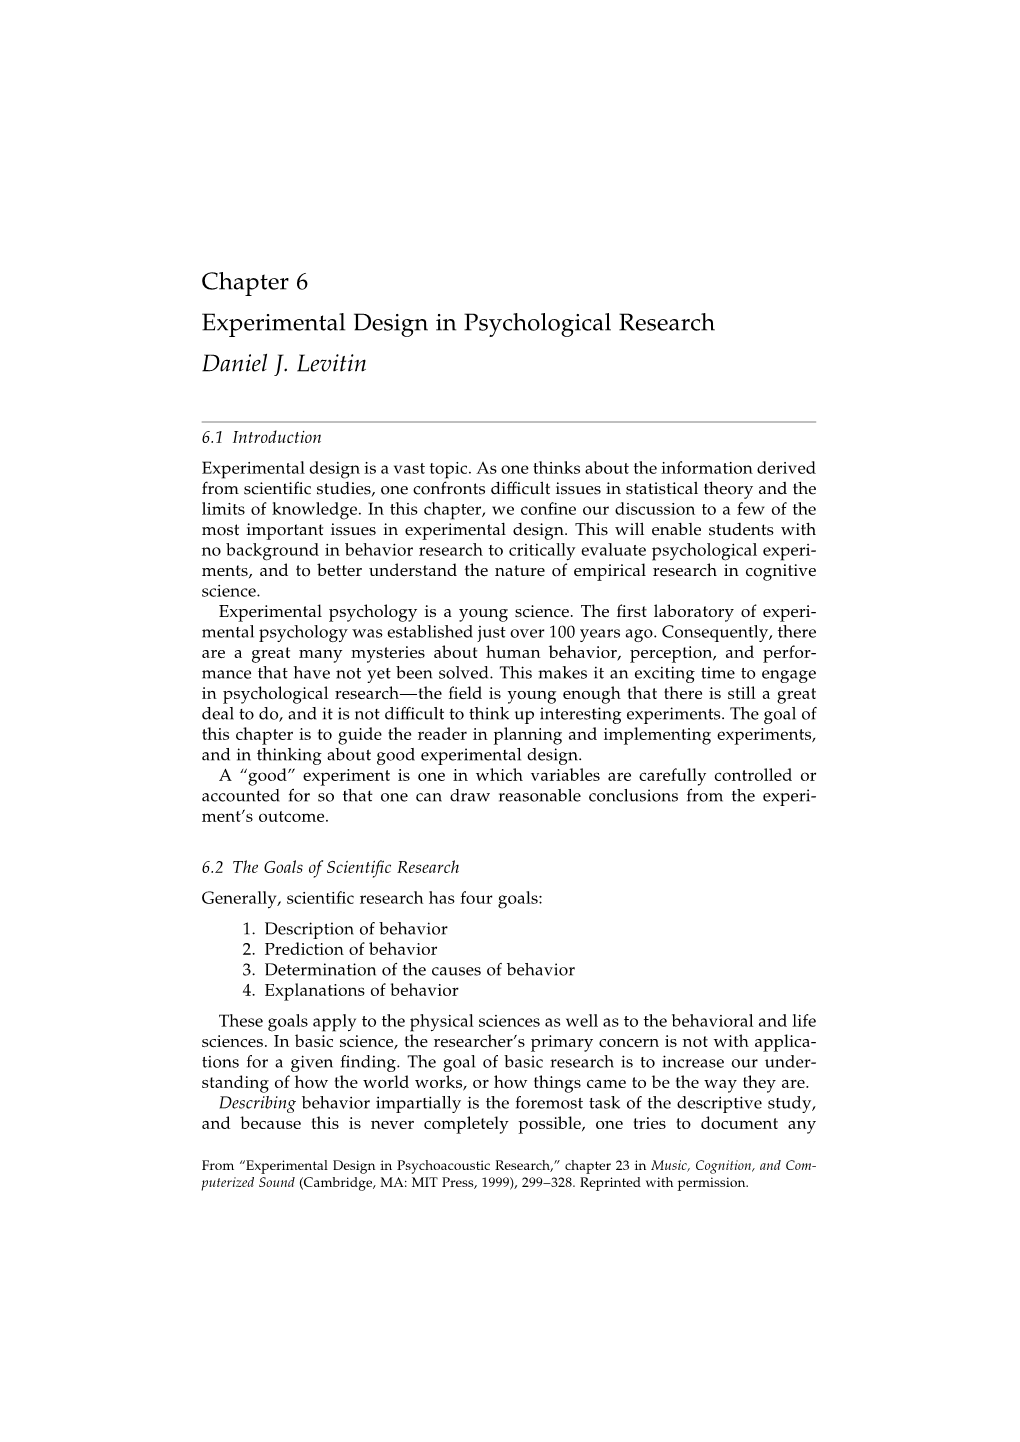 Chapter 6 Experimental Design in Psychological Research Daniel J